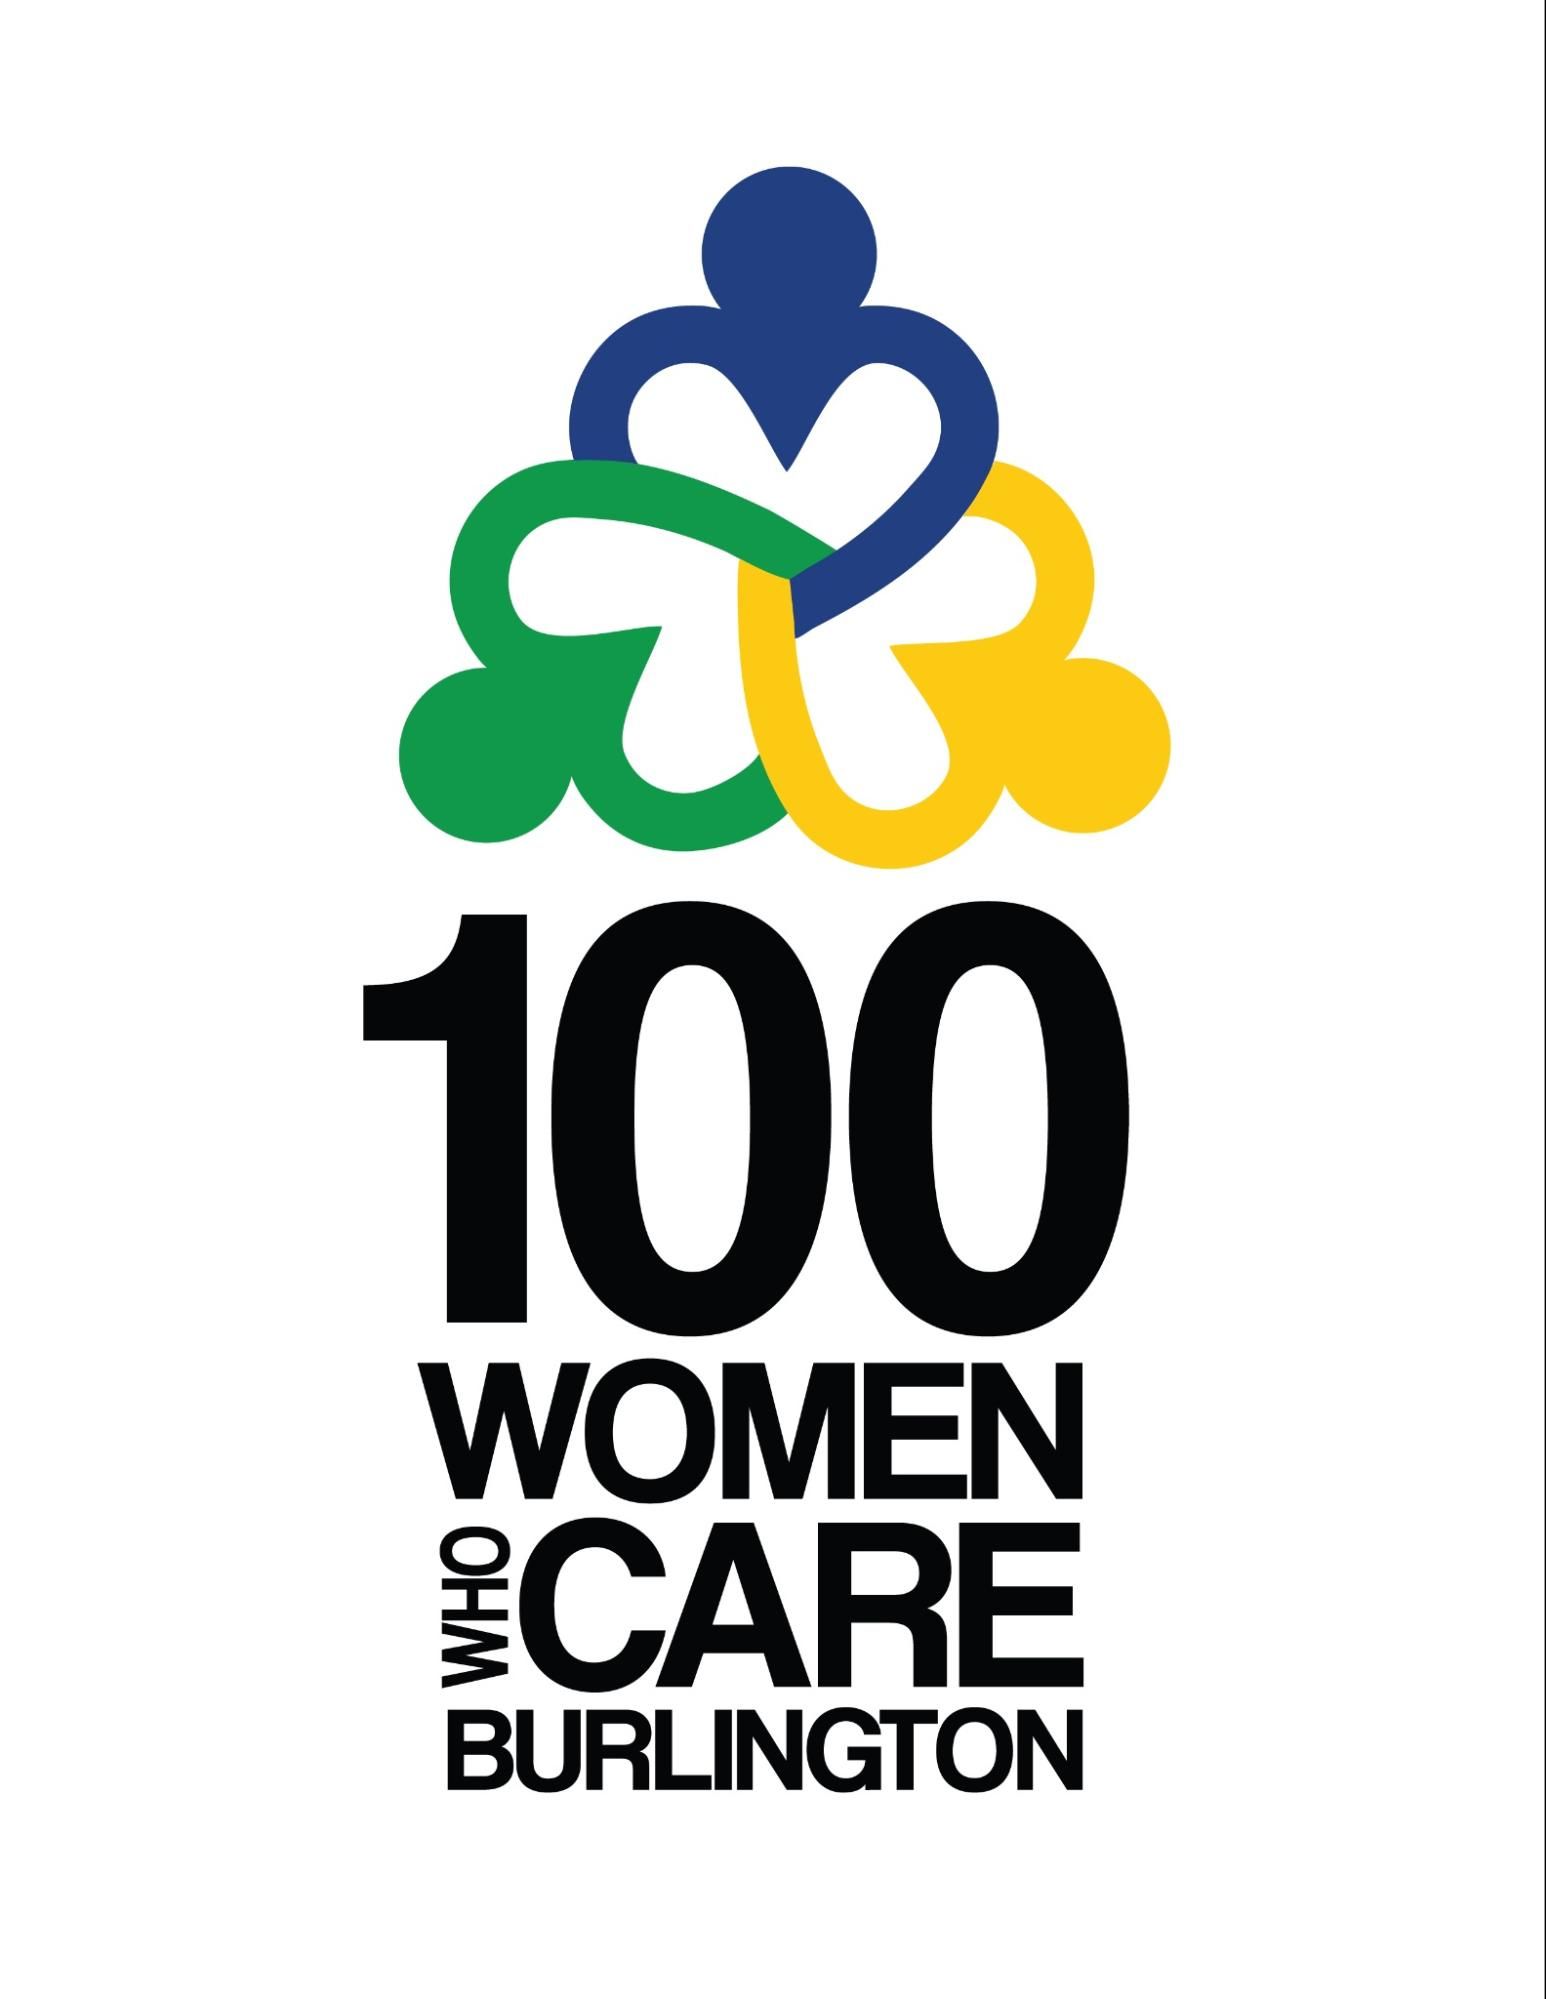 100 Women who care burlington logo